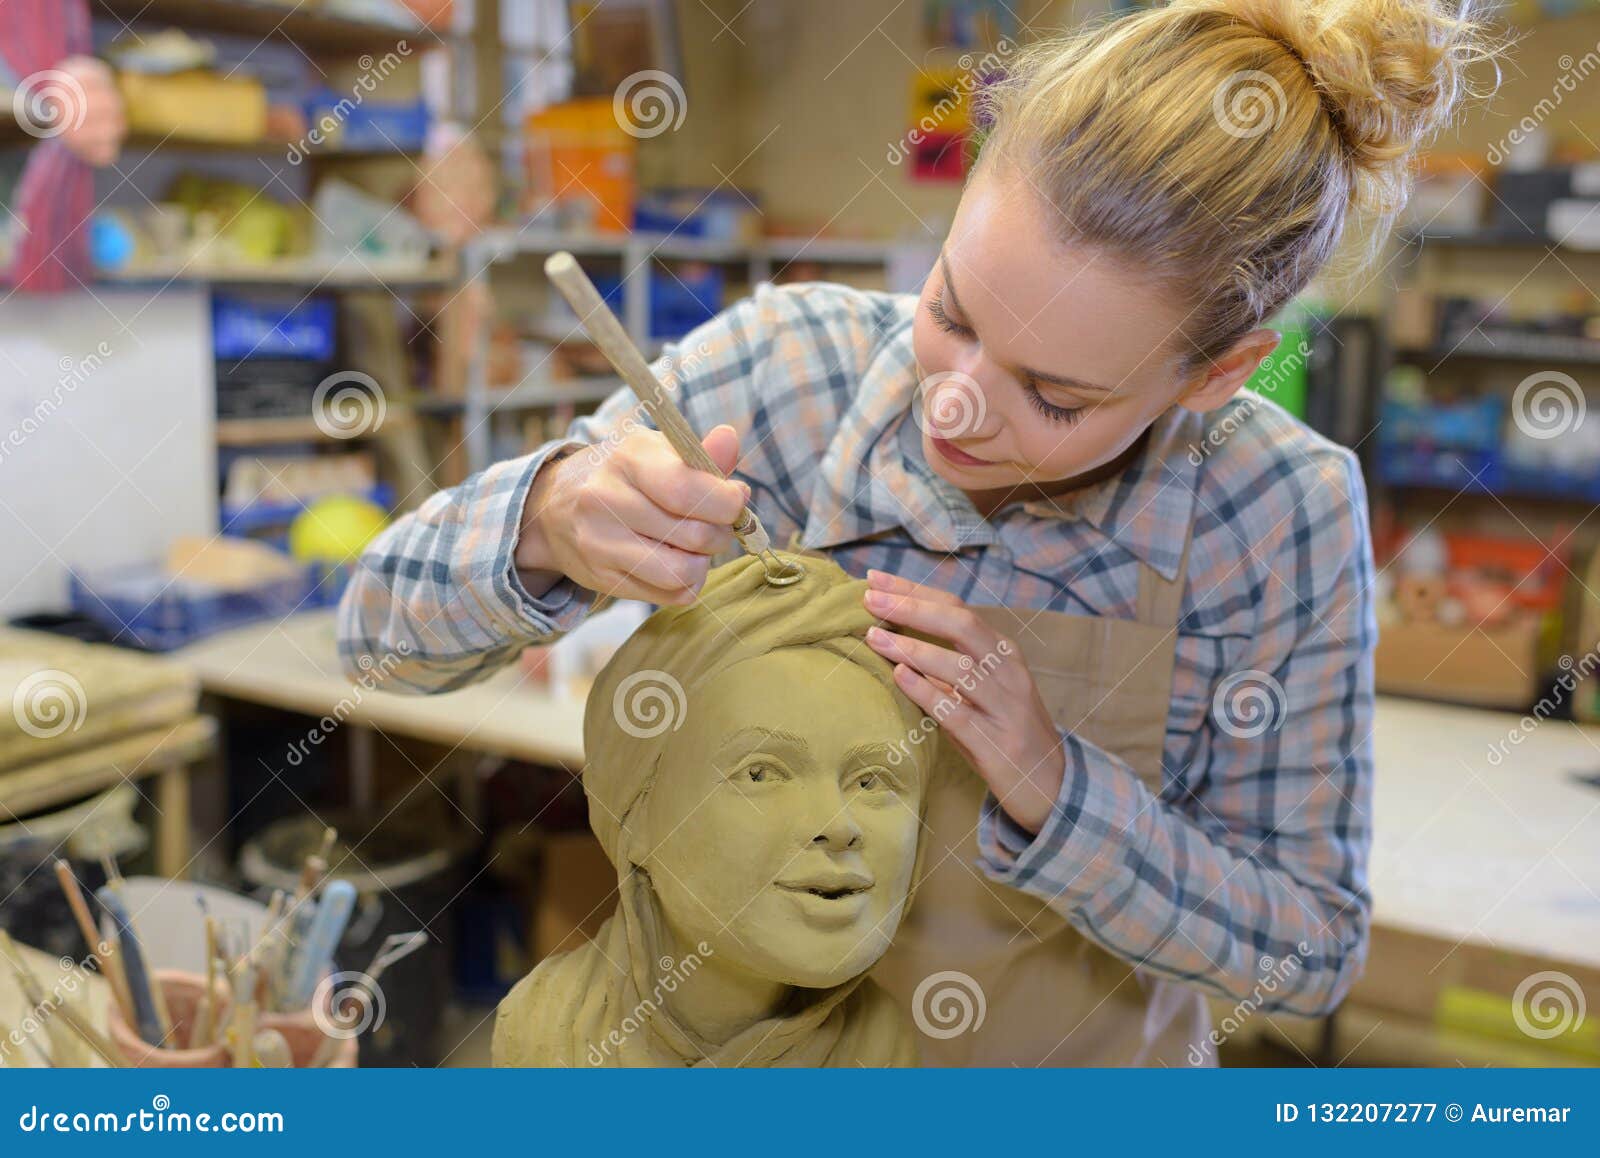 female sculptor at work